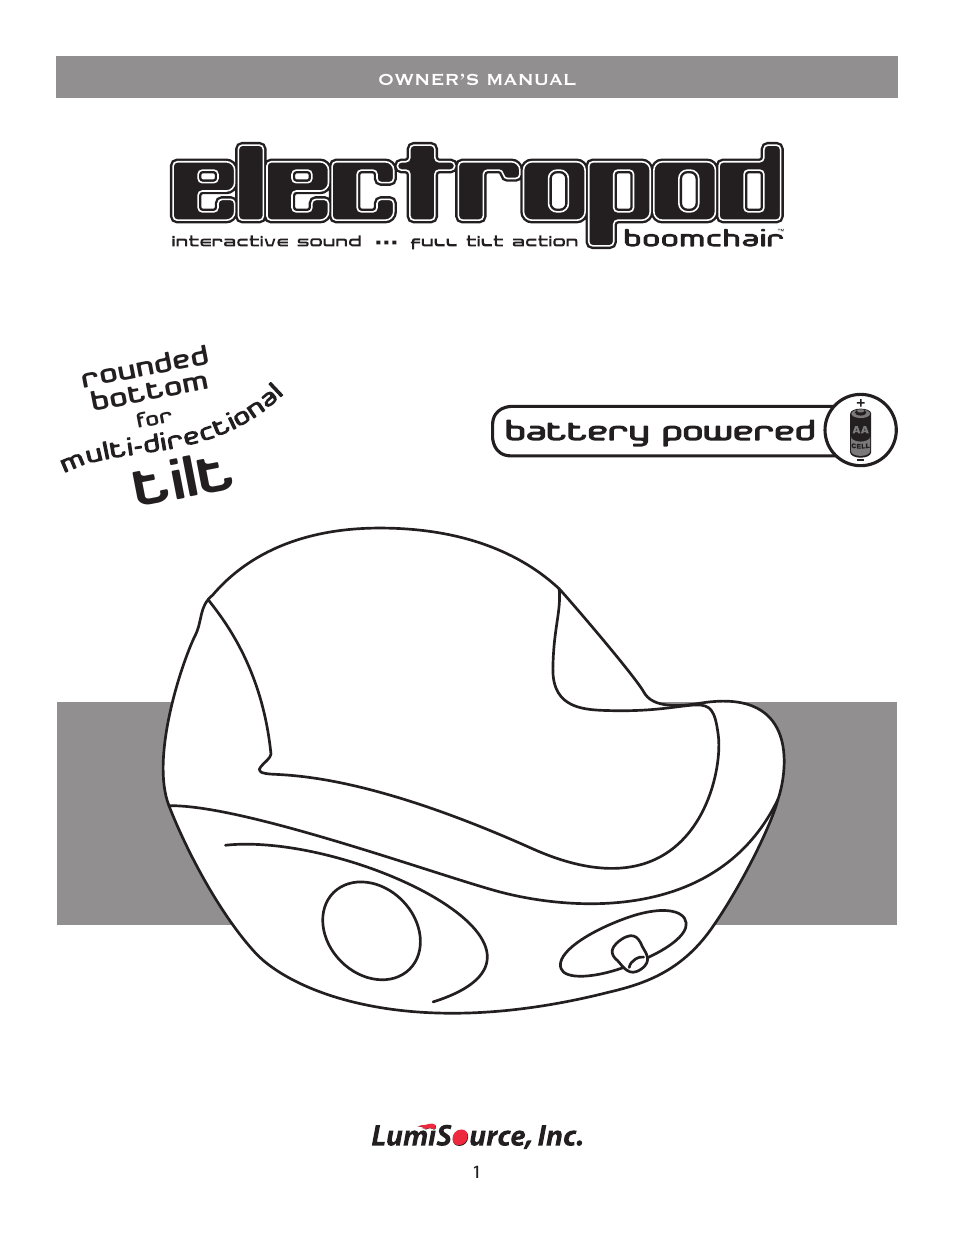 ElectroPod